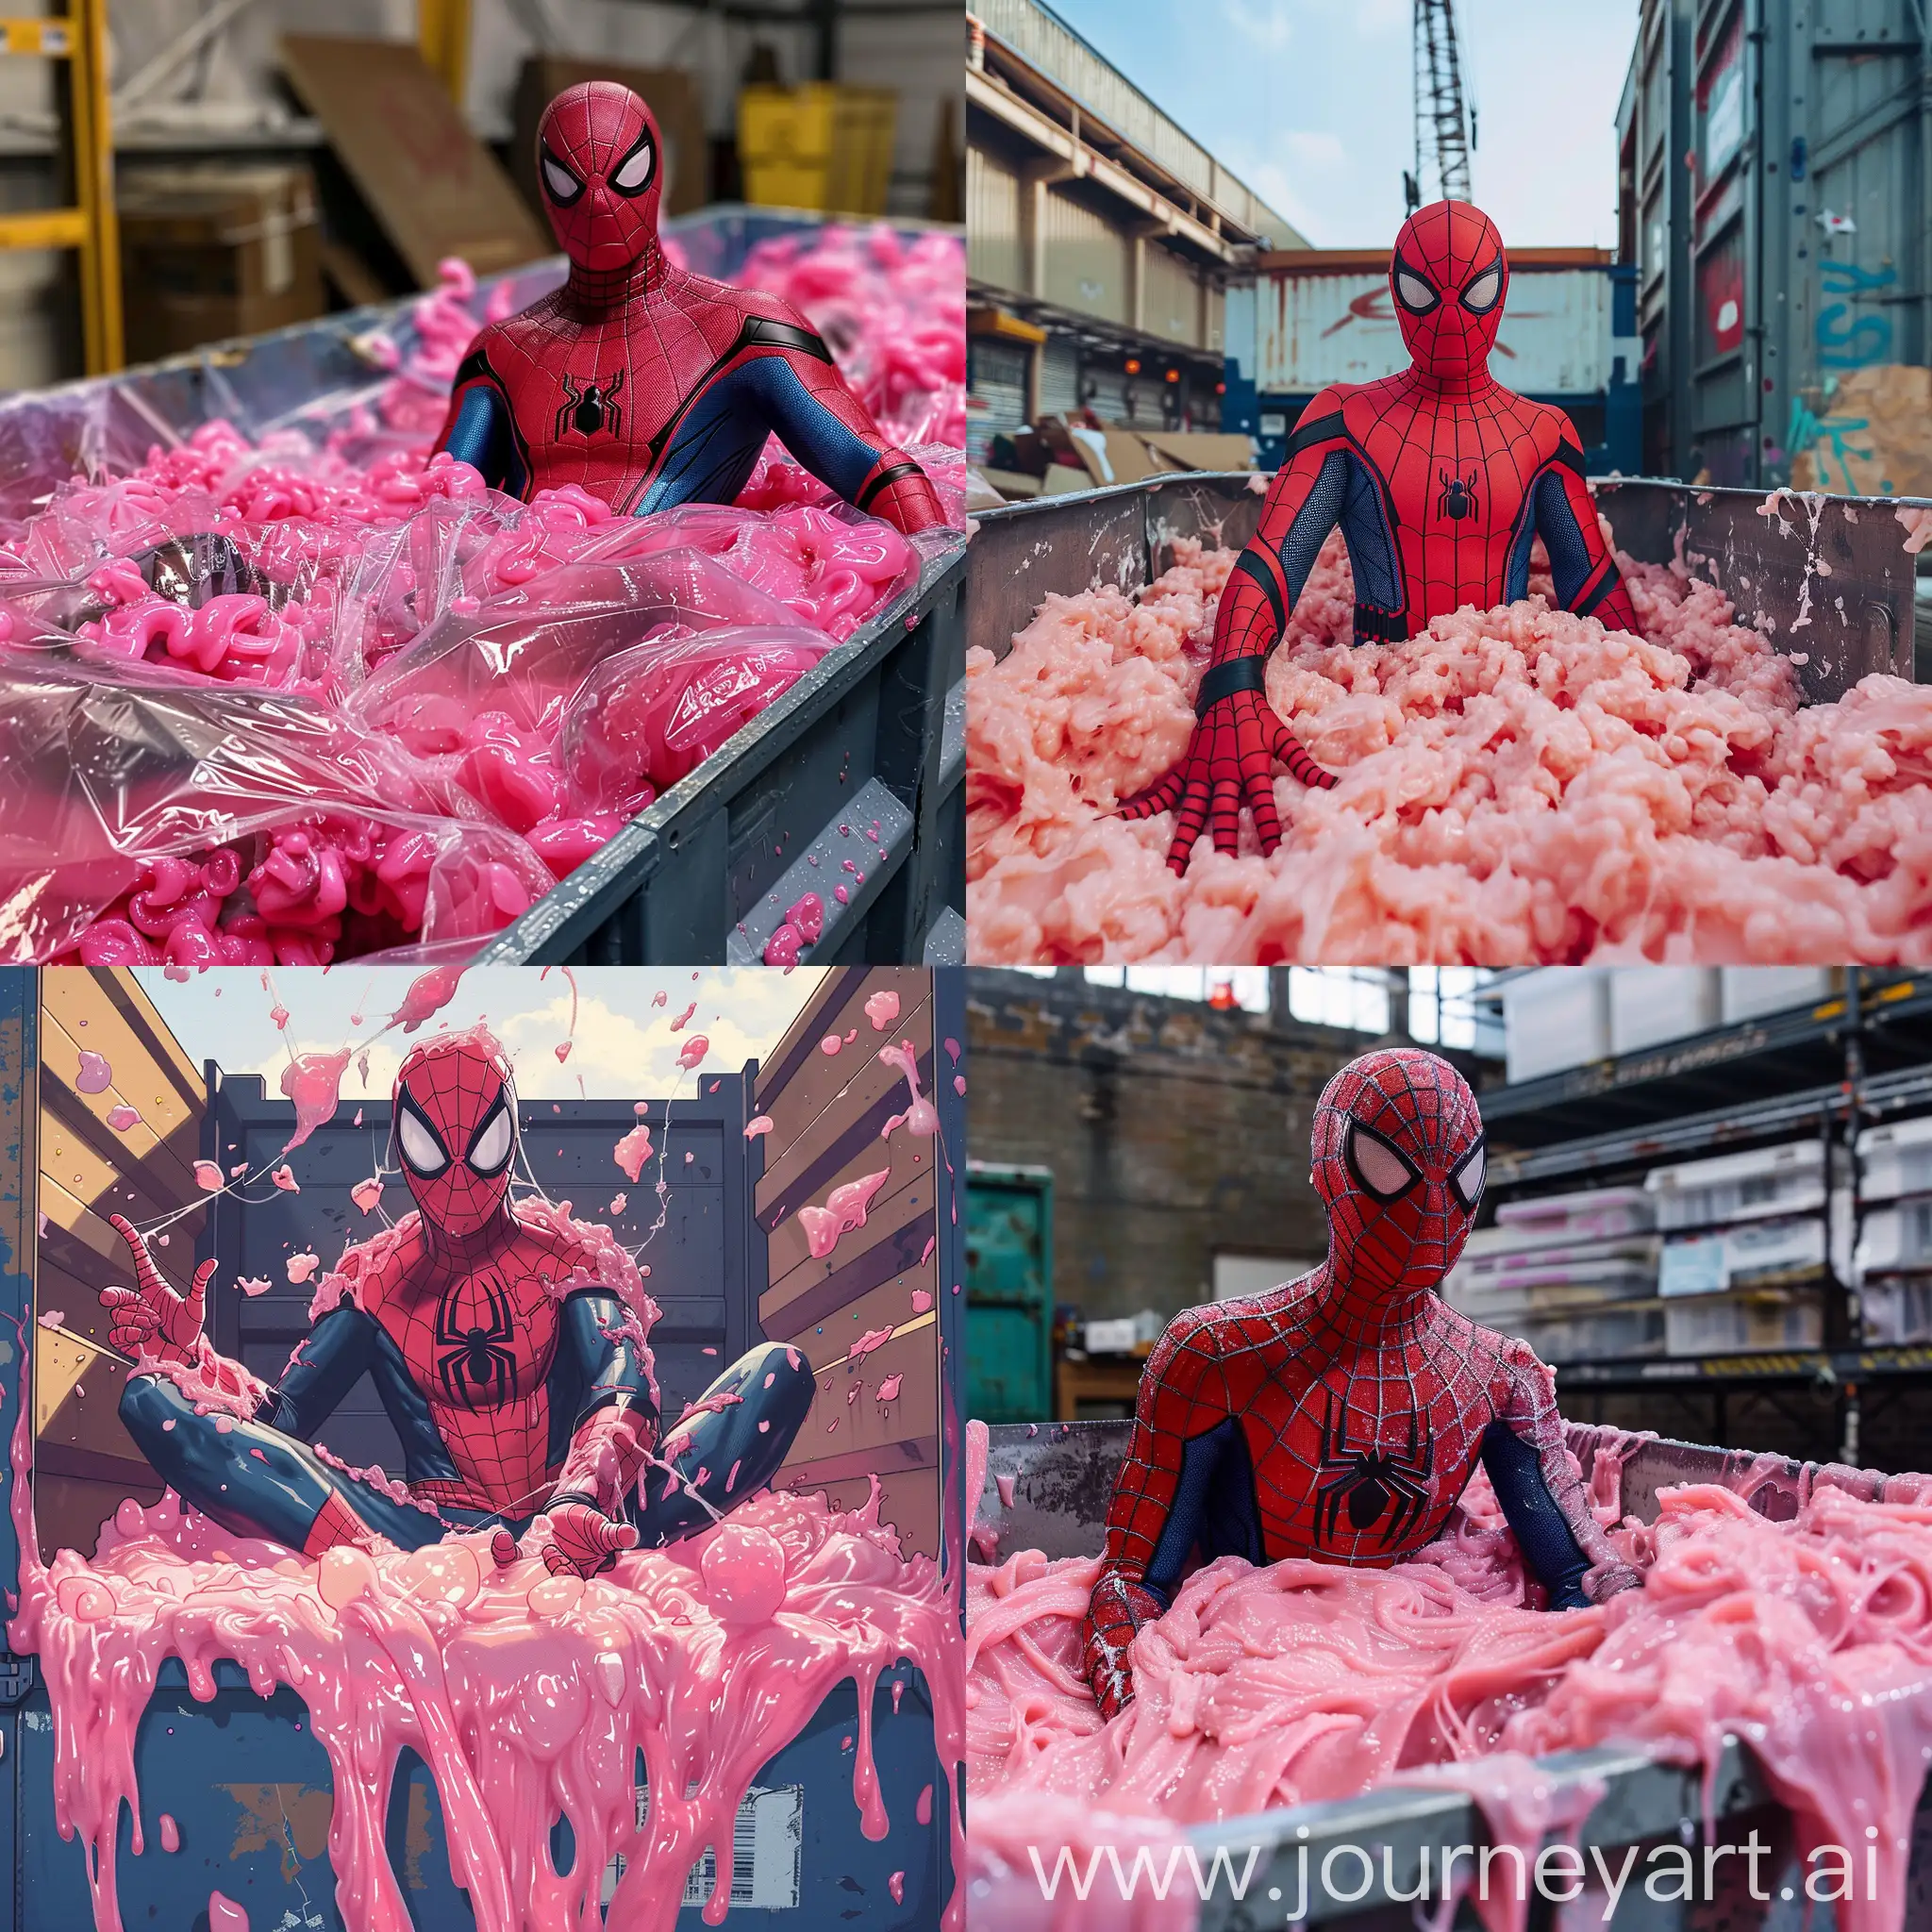 SpiderMan-Confronts-Pink-Slime-in-Urban-Dumpster-Scene